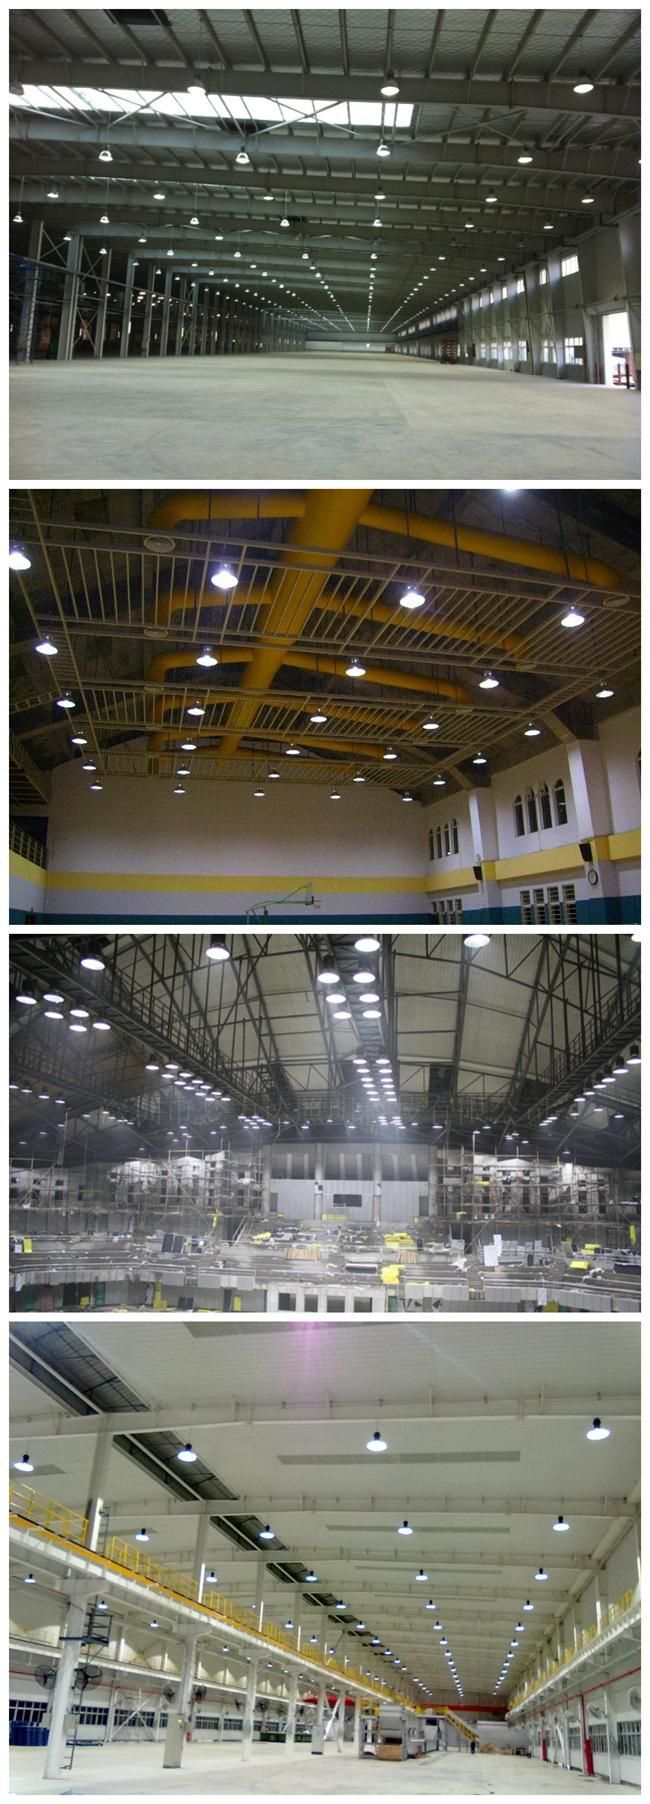 Top Quality Workshop Industrial 200W Aluminum LED Highbay Lights